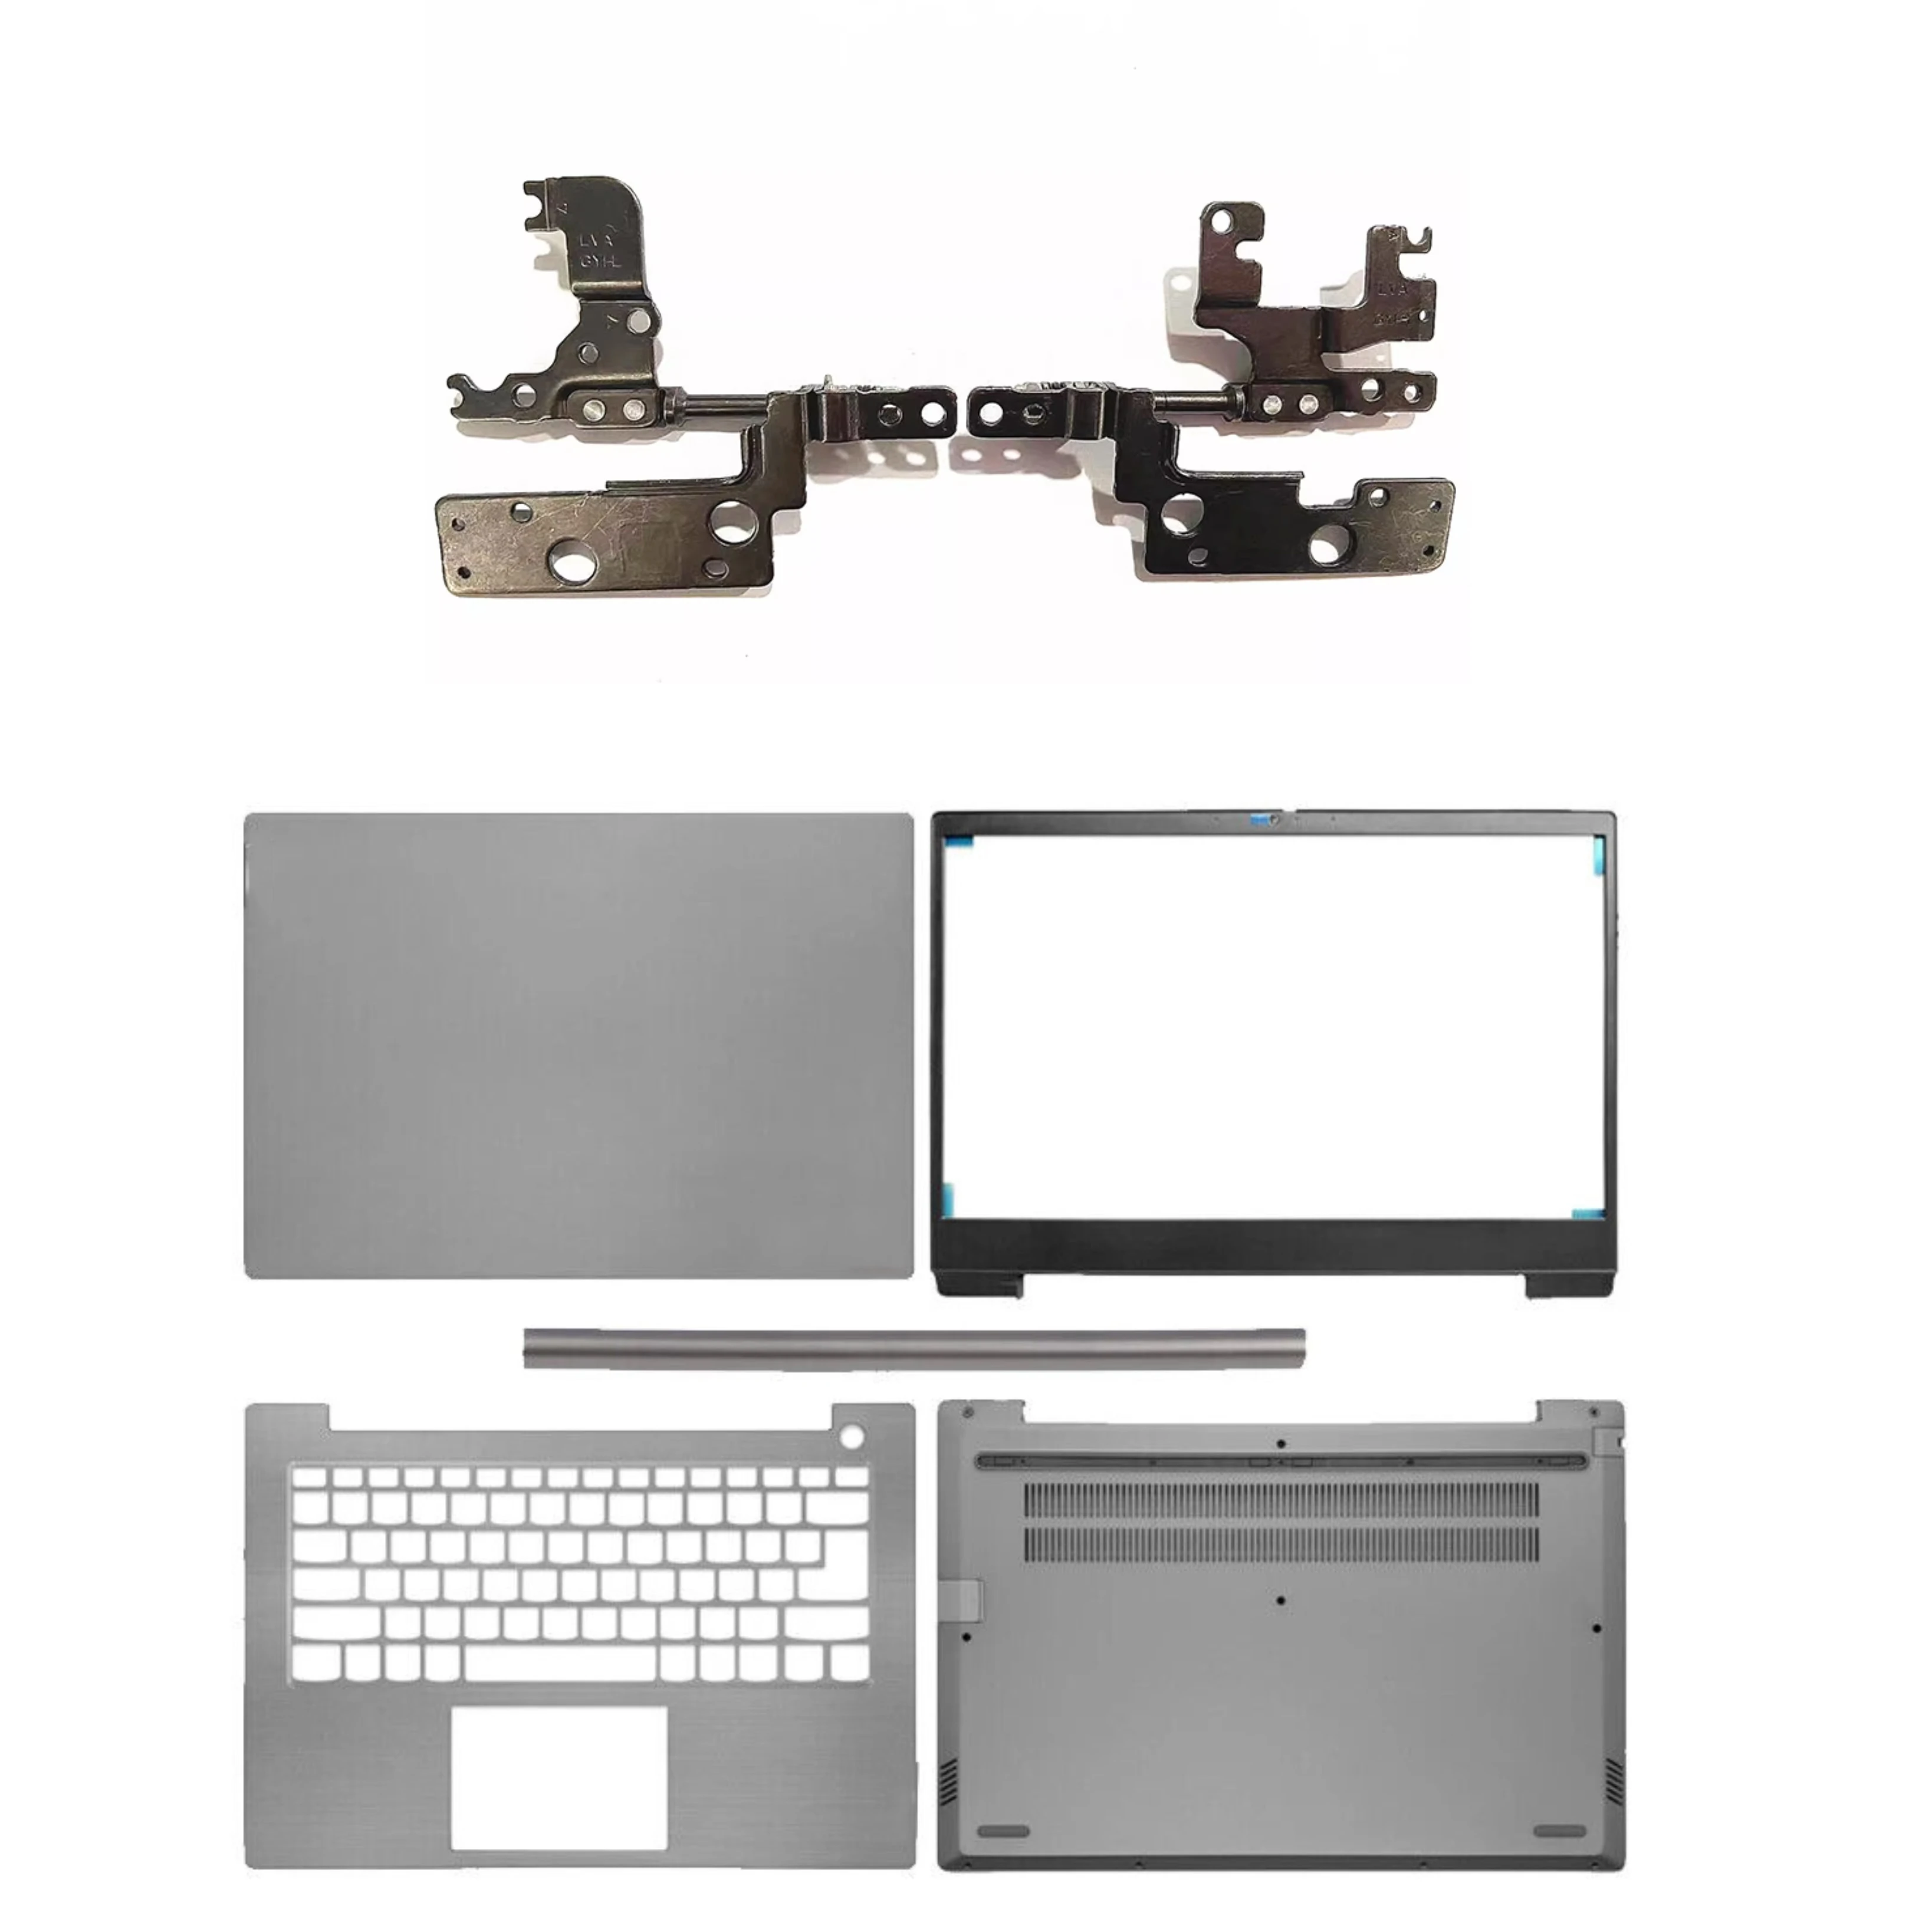 

Задняя крышка ЖК-экрана, корпус, подставка для рук, верхний корпус, нижний корпус, базовая крышка, петли, крышка, крышка для Lenovo ThinkBook 14-IML 14-IIL